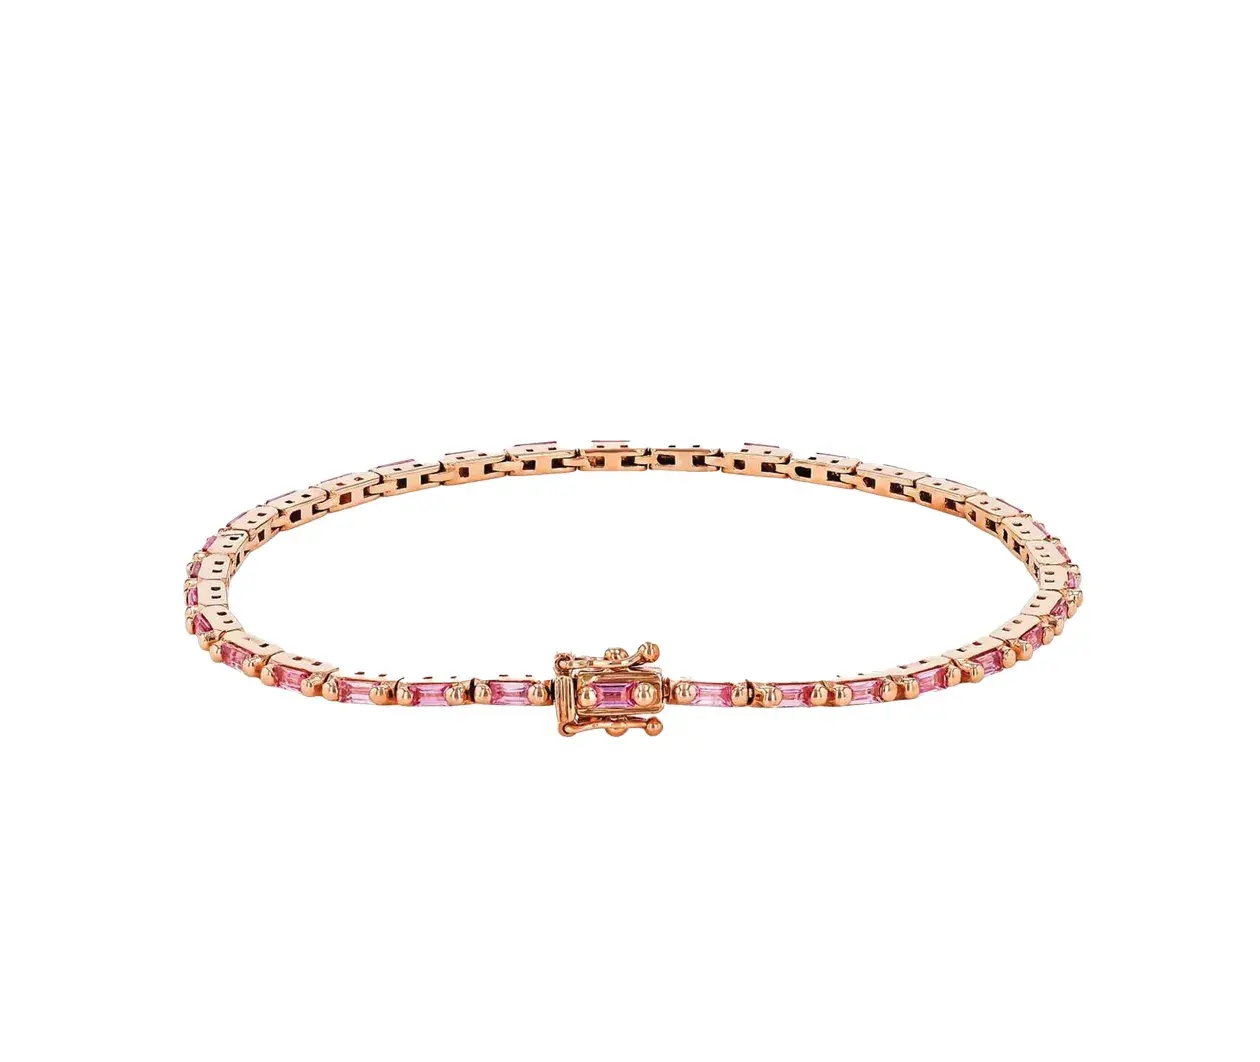 Pink Sapphire Bracelet in Rose Gold